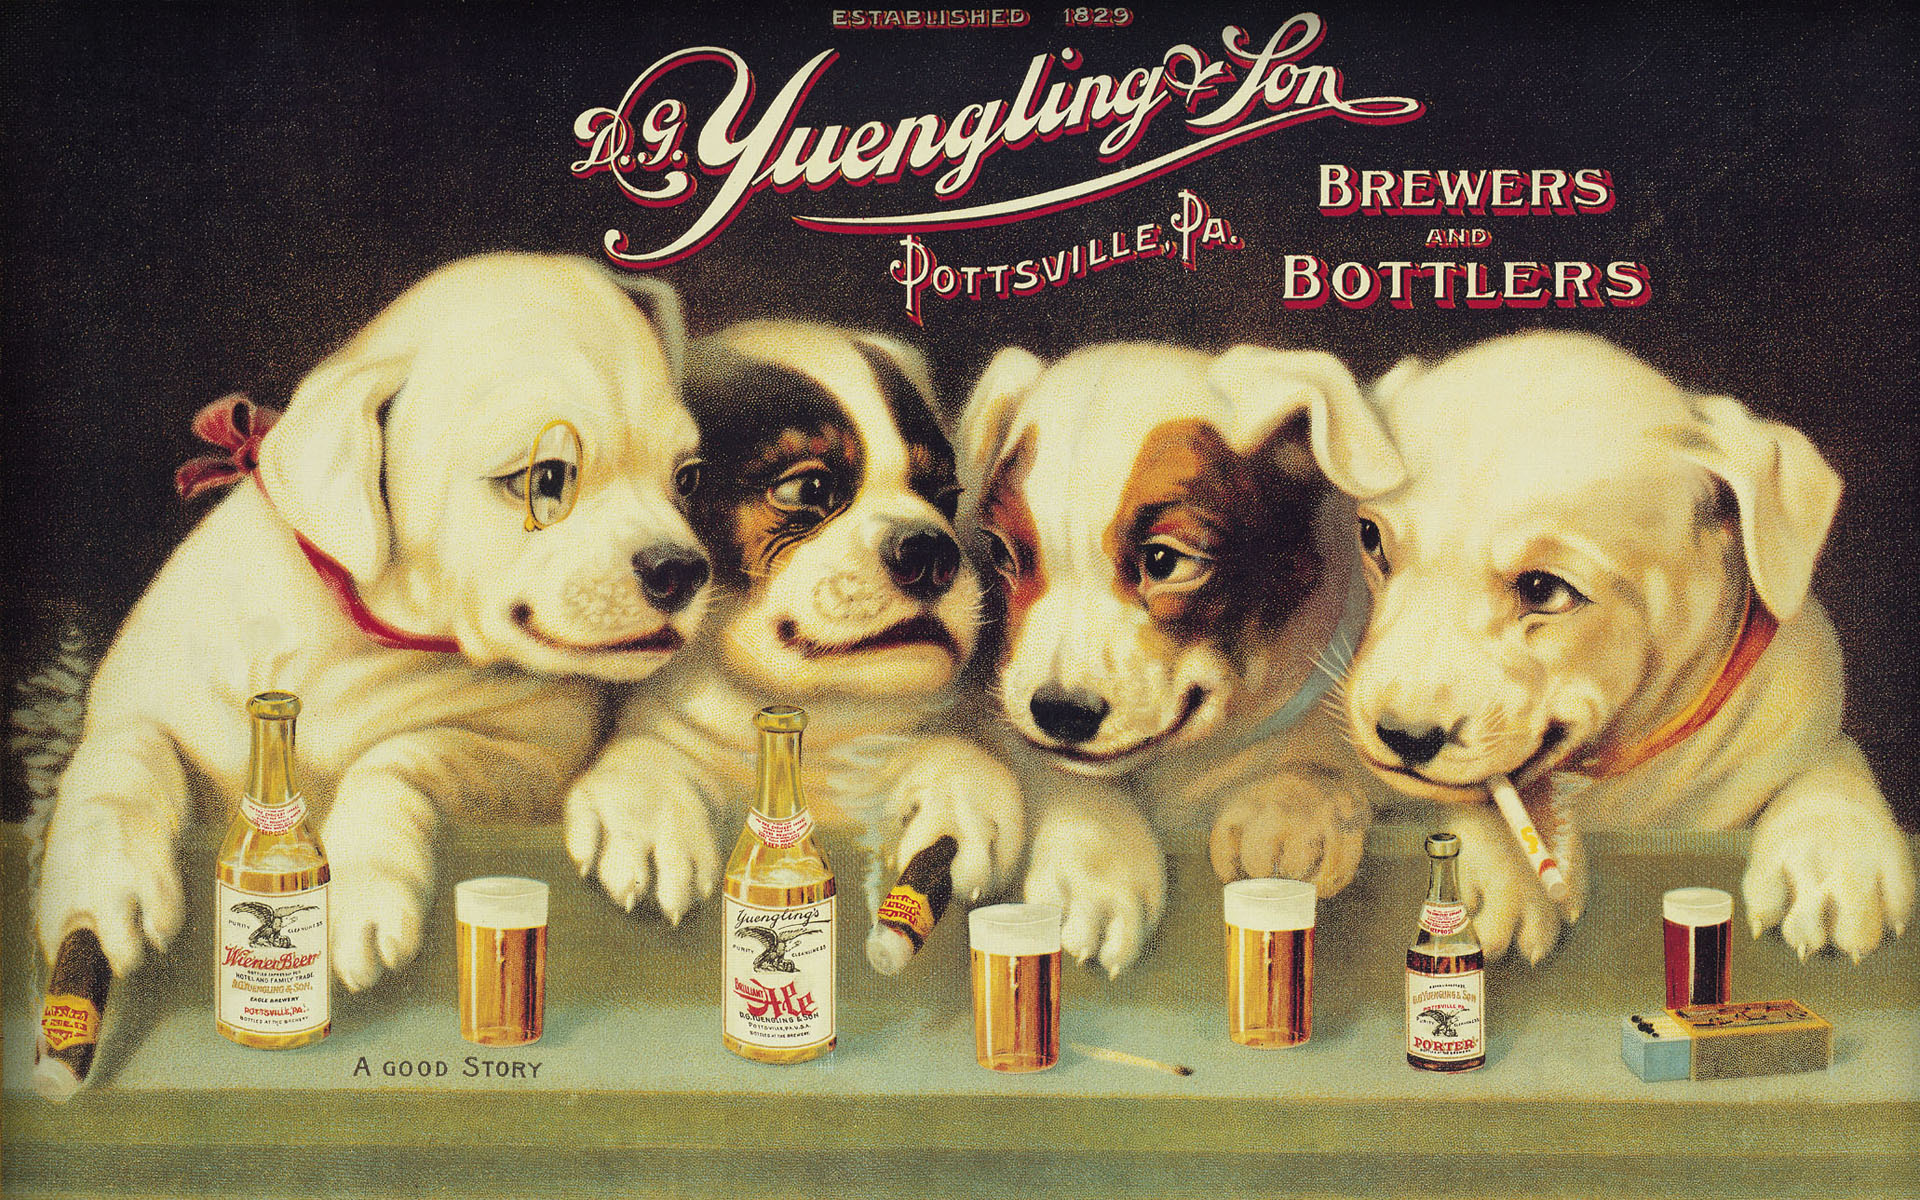 Постер собаки. Постеры с собаками. Советские плакаты с собаками. Плакат щенки. Собаки на советских постерах.